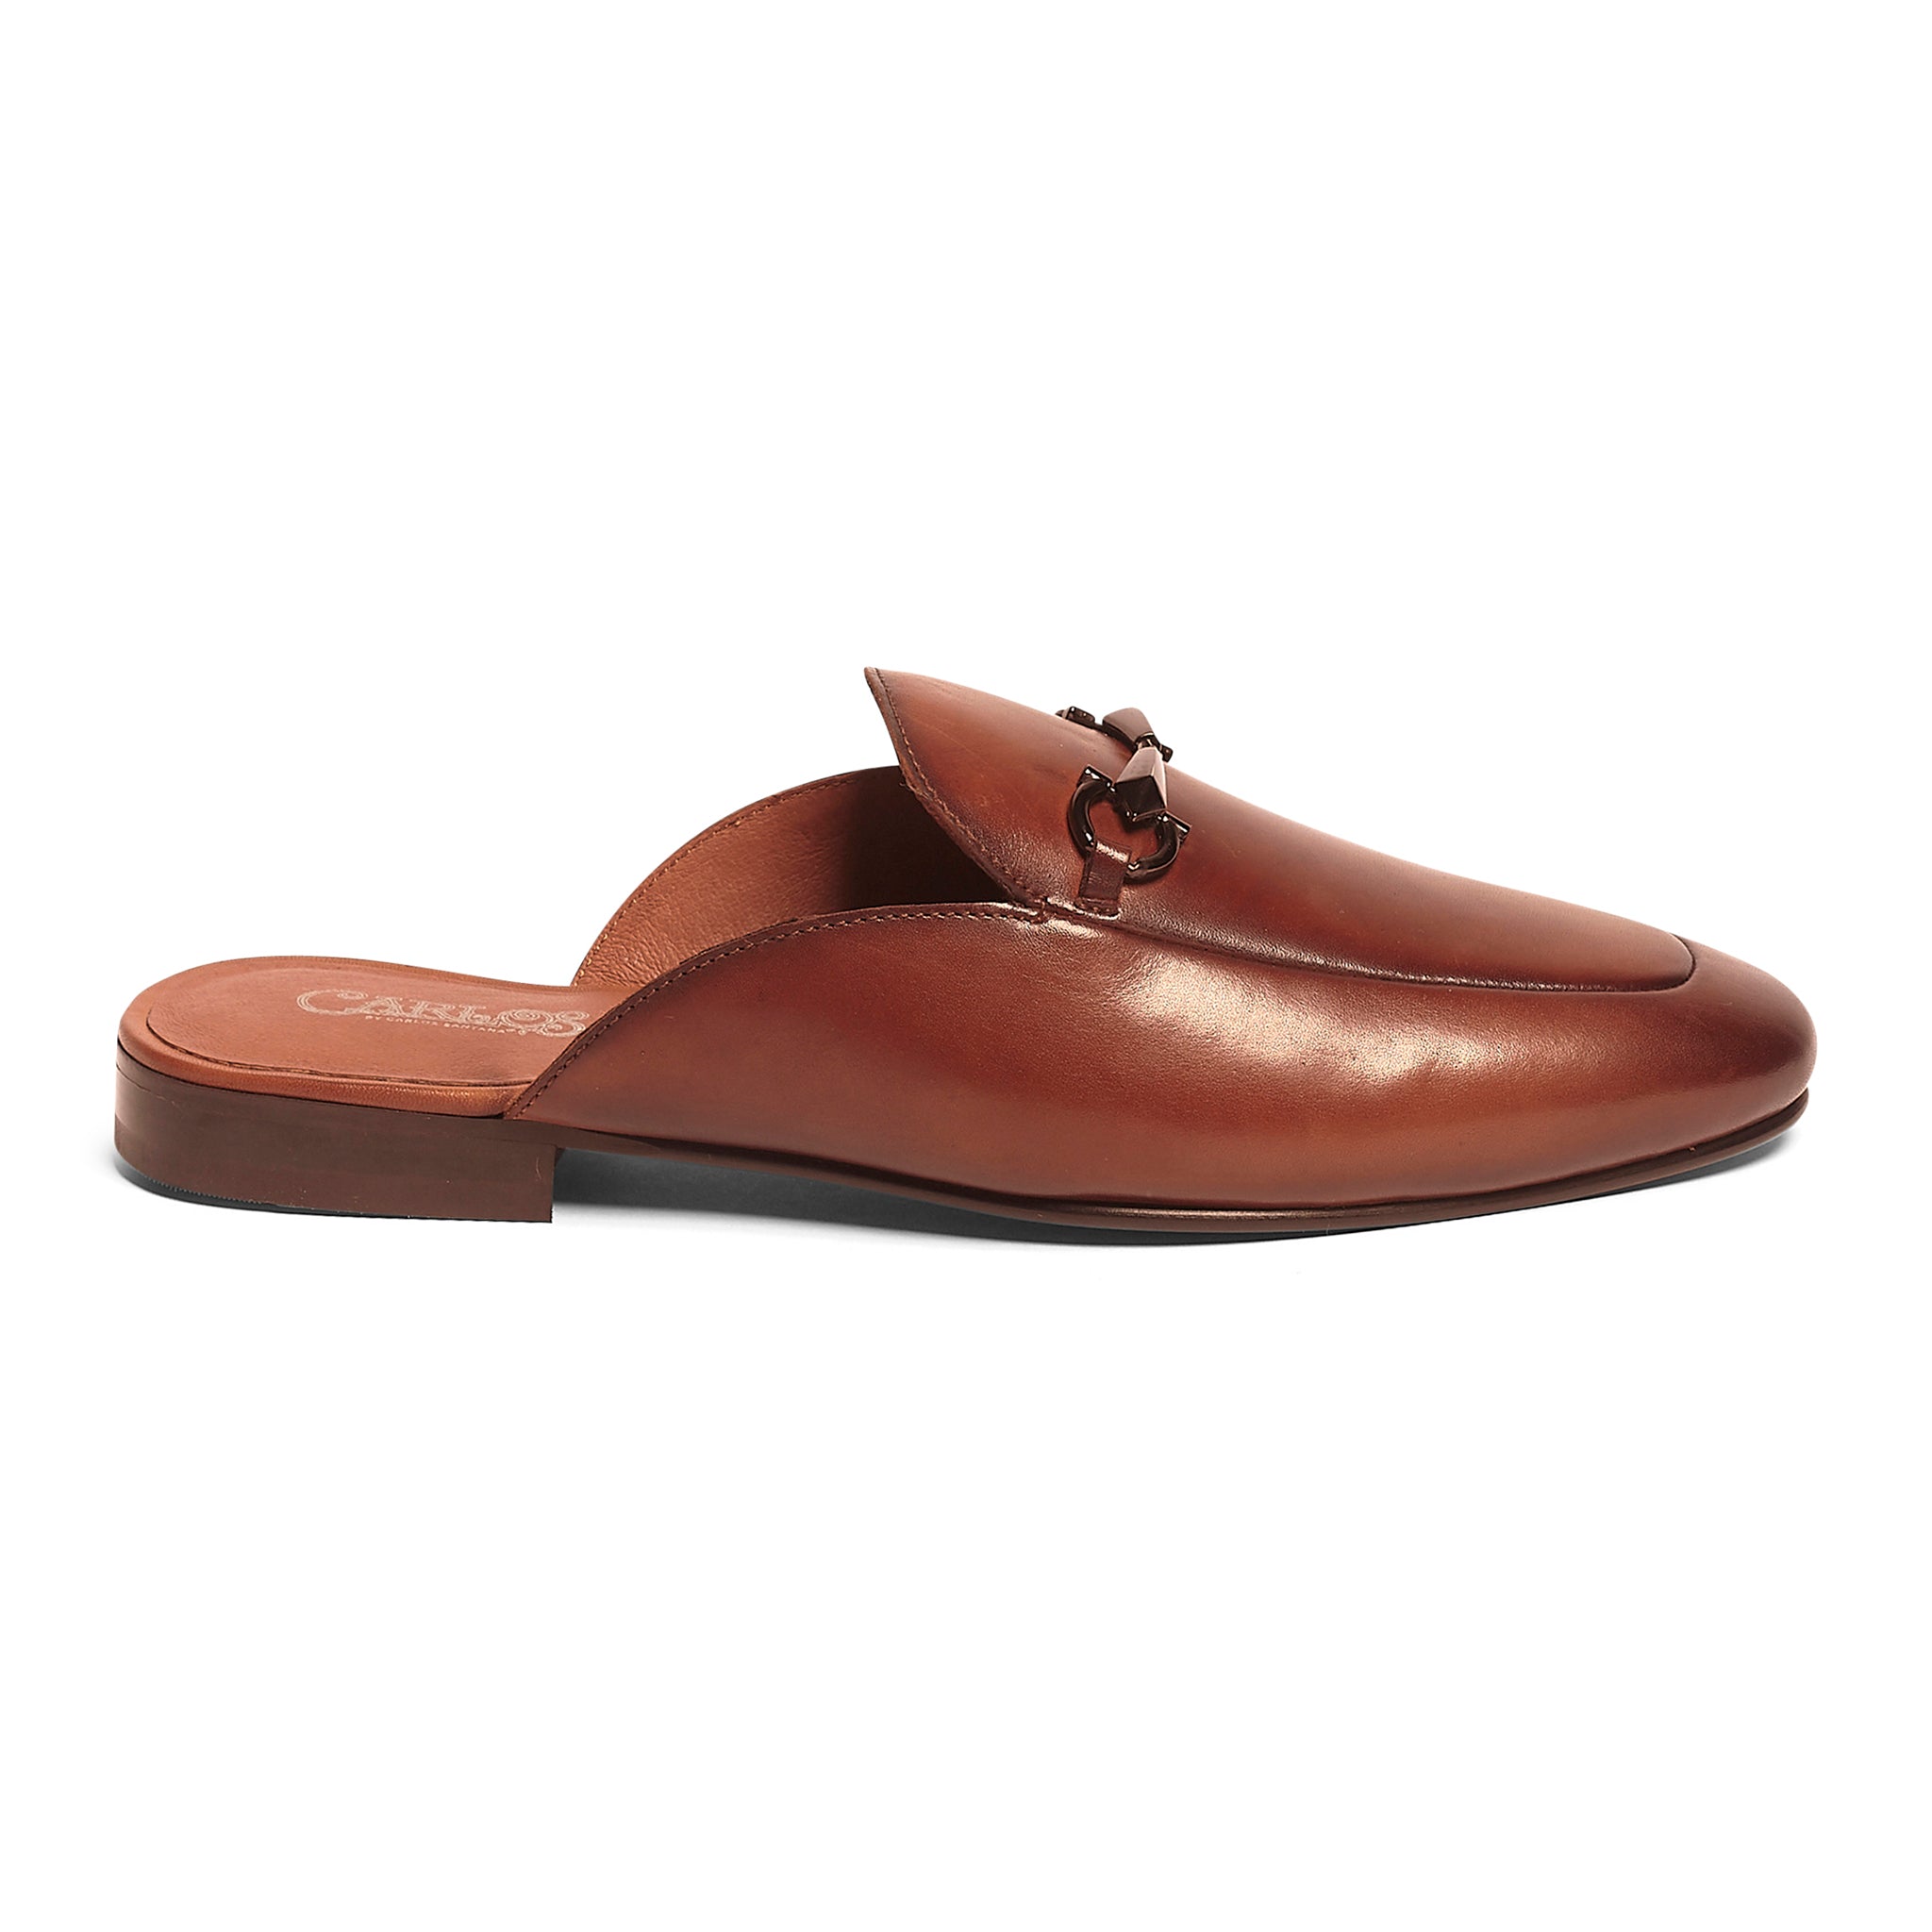 Apollo Bit Slide shoe brown